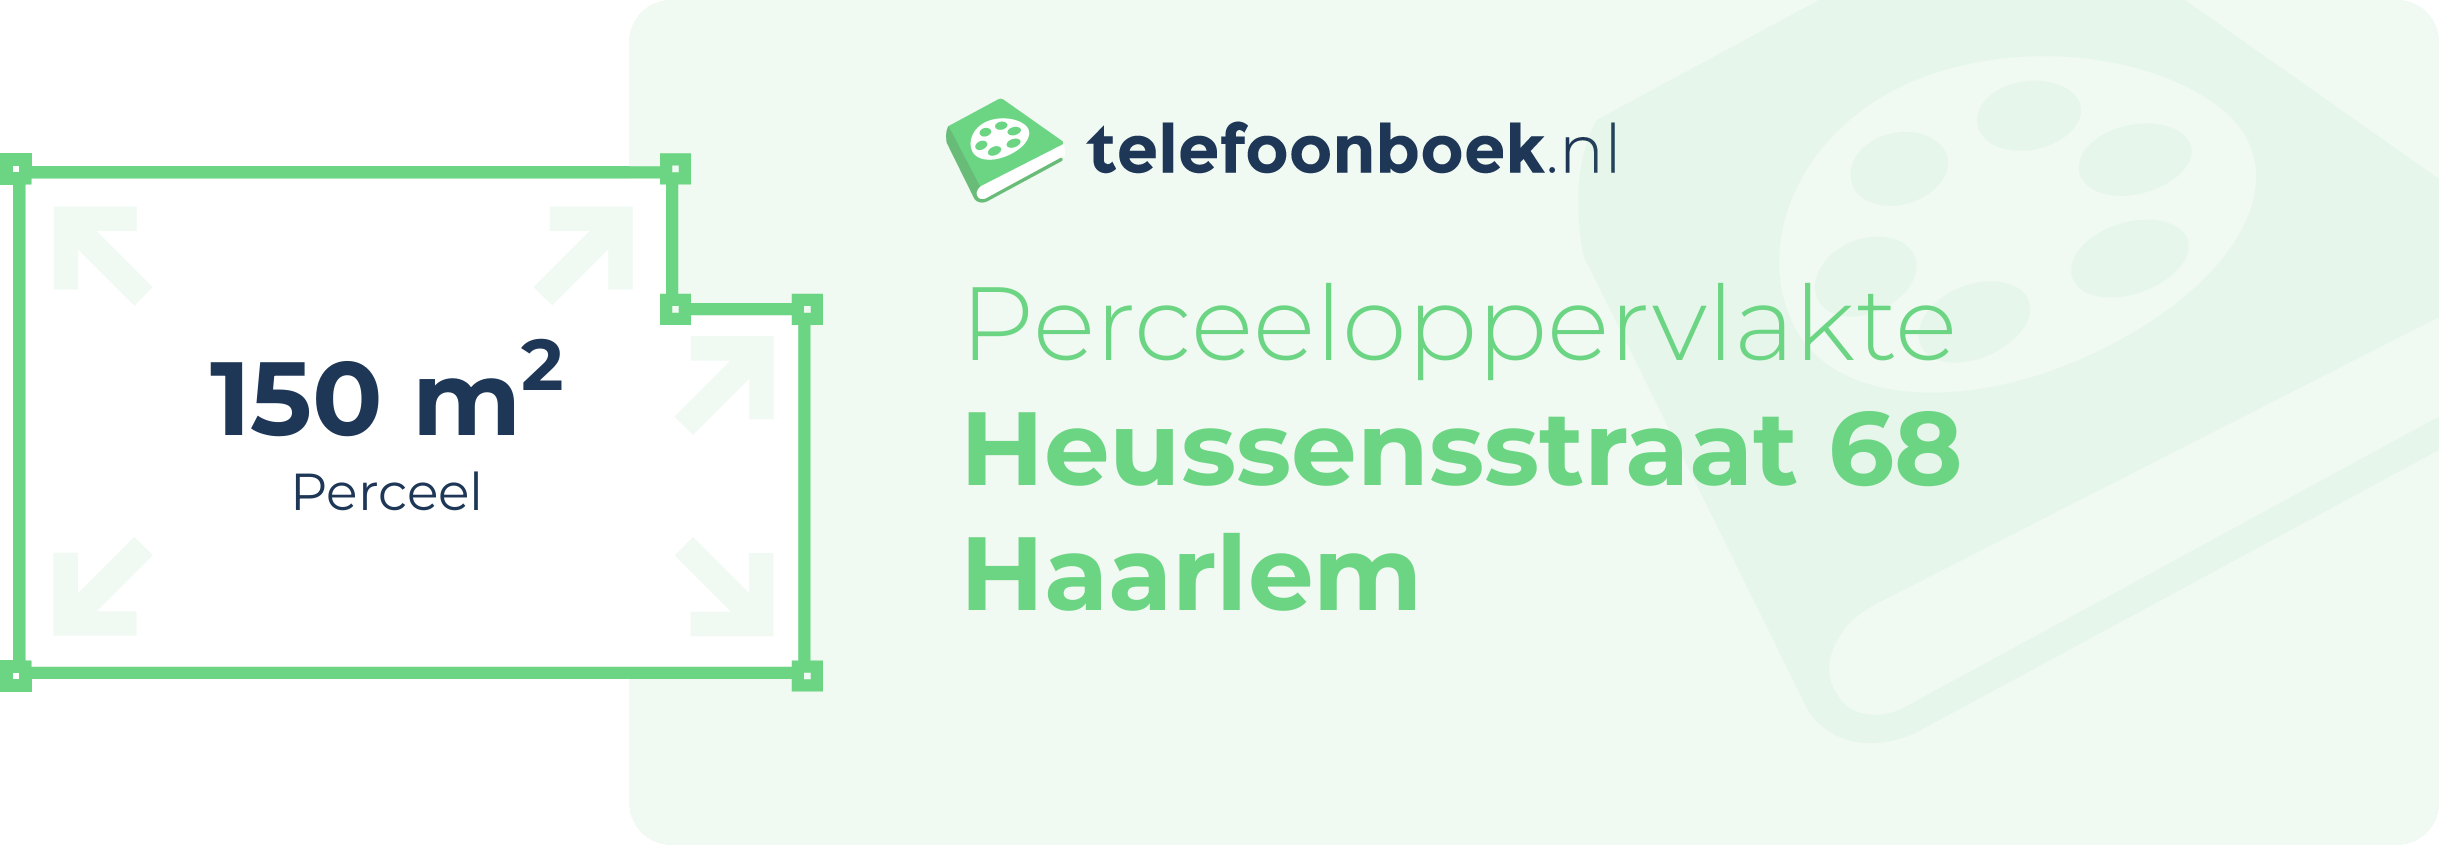 Perceeloppervlakte Heussensstraat 68 Haarlem